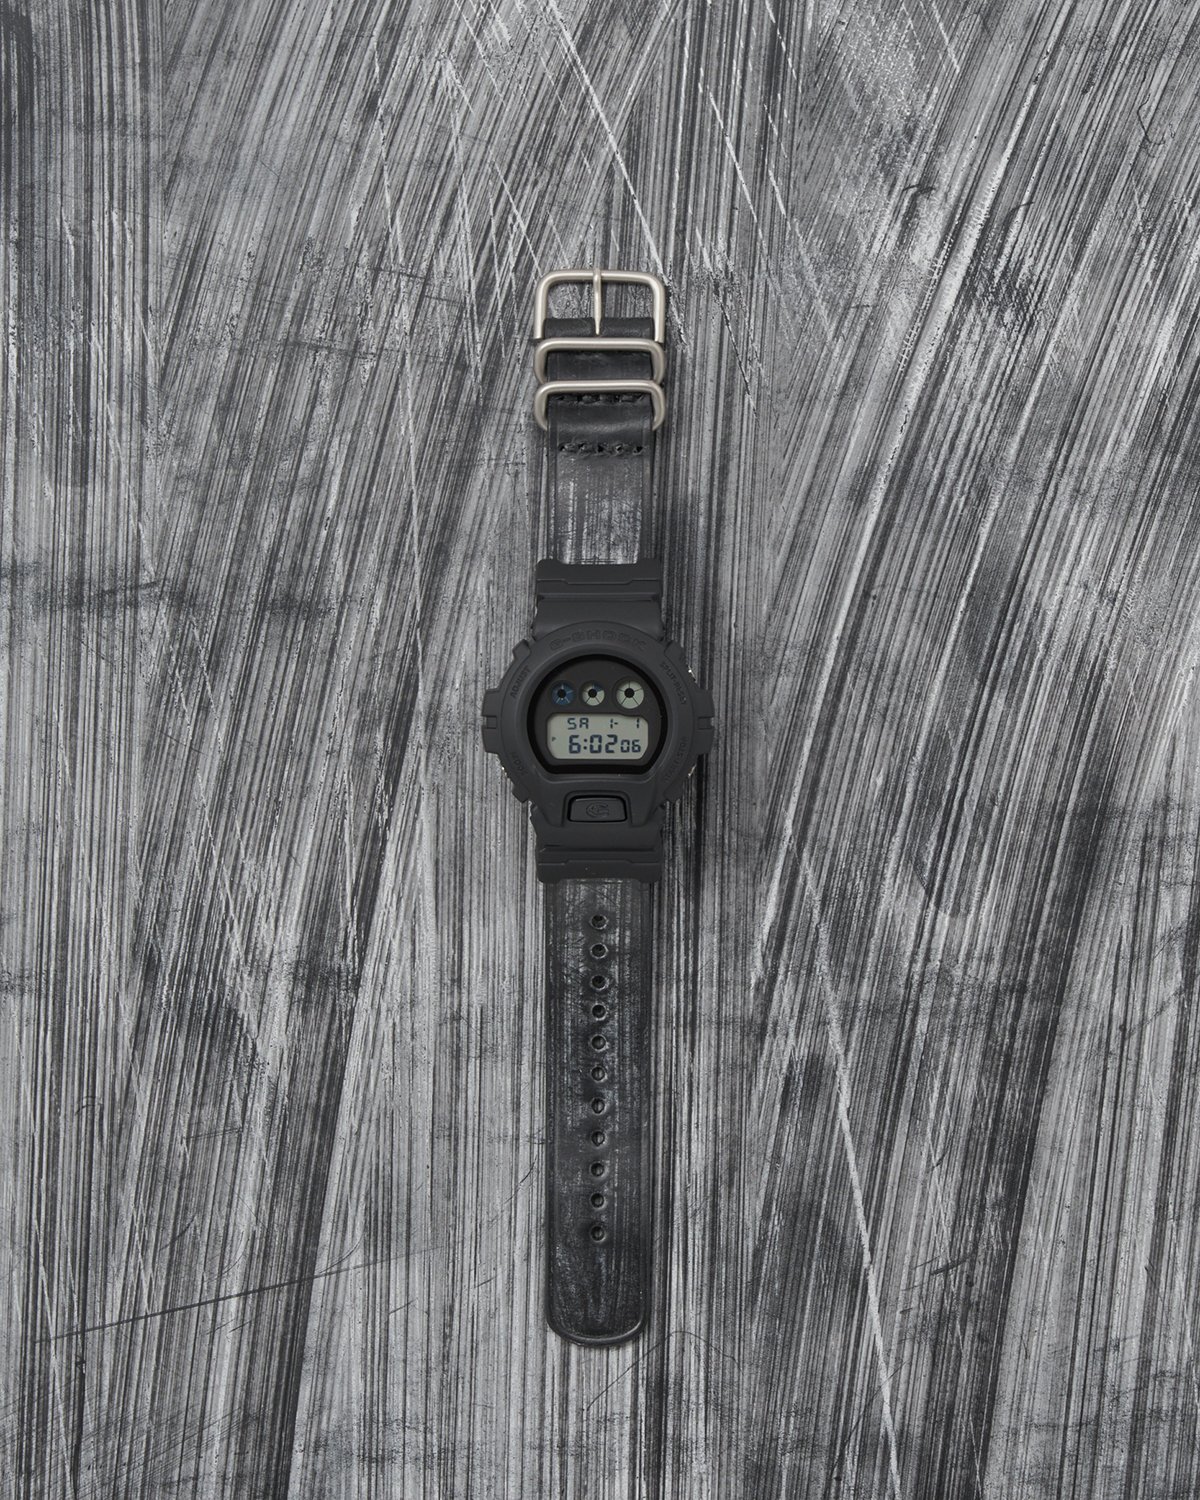 Hender Scheme × G-SHOCK DW-6900 腕時計(デジタル) | seniorwings.jpn.org